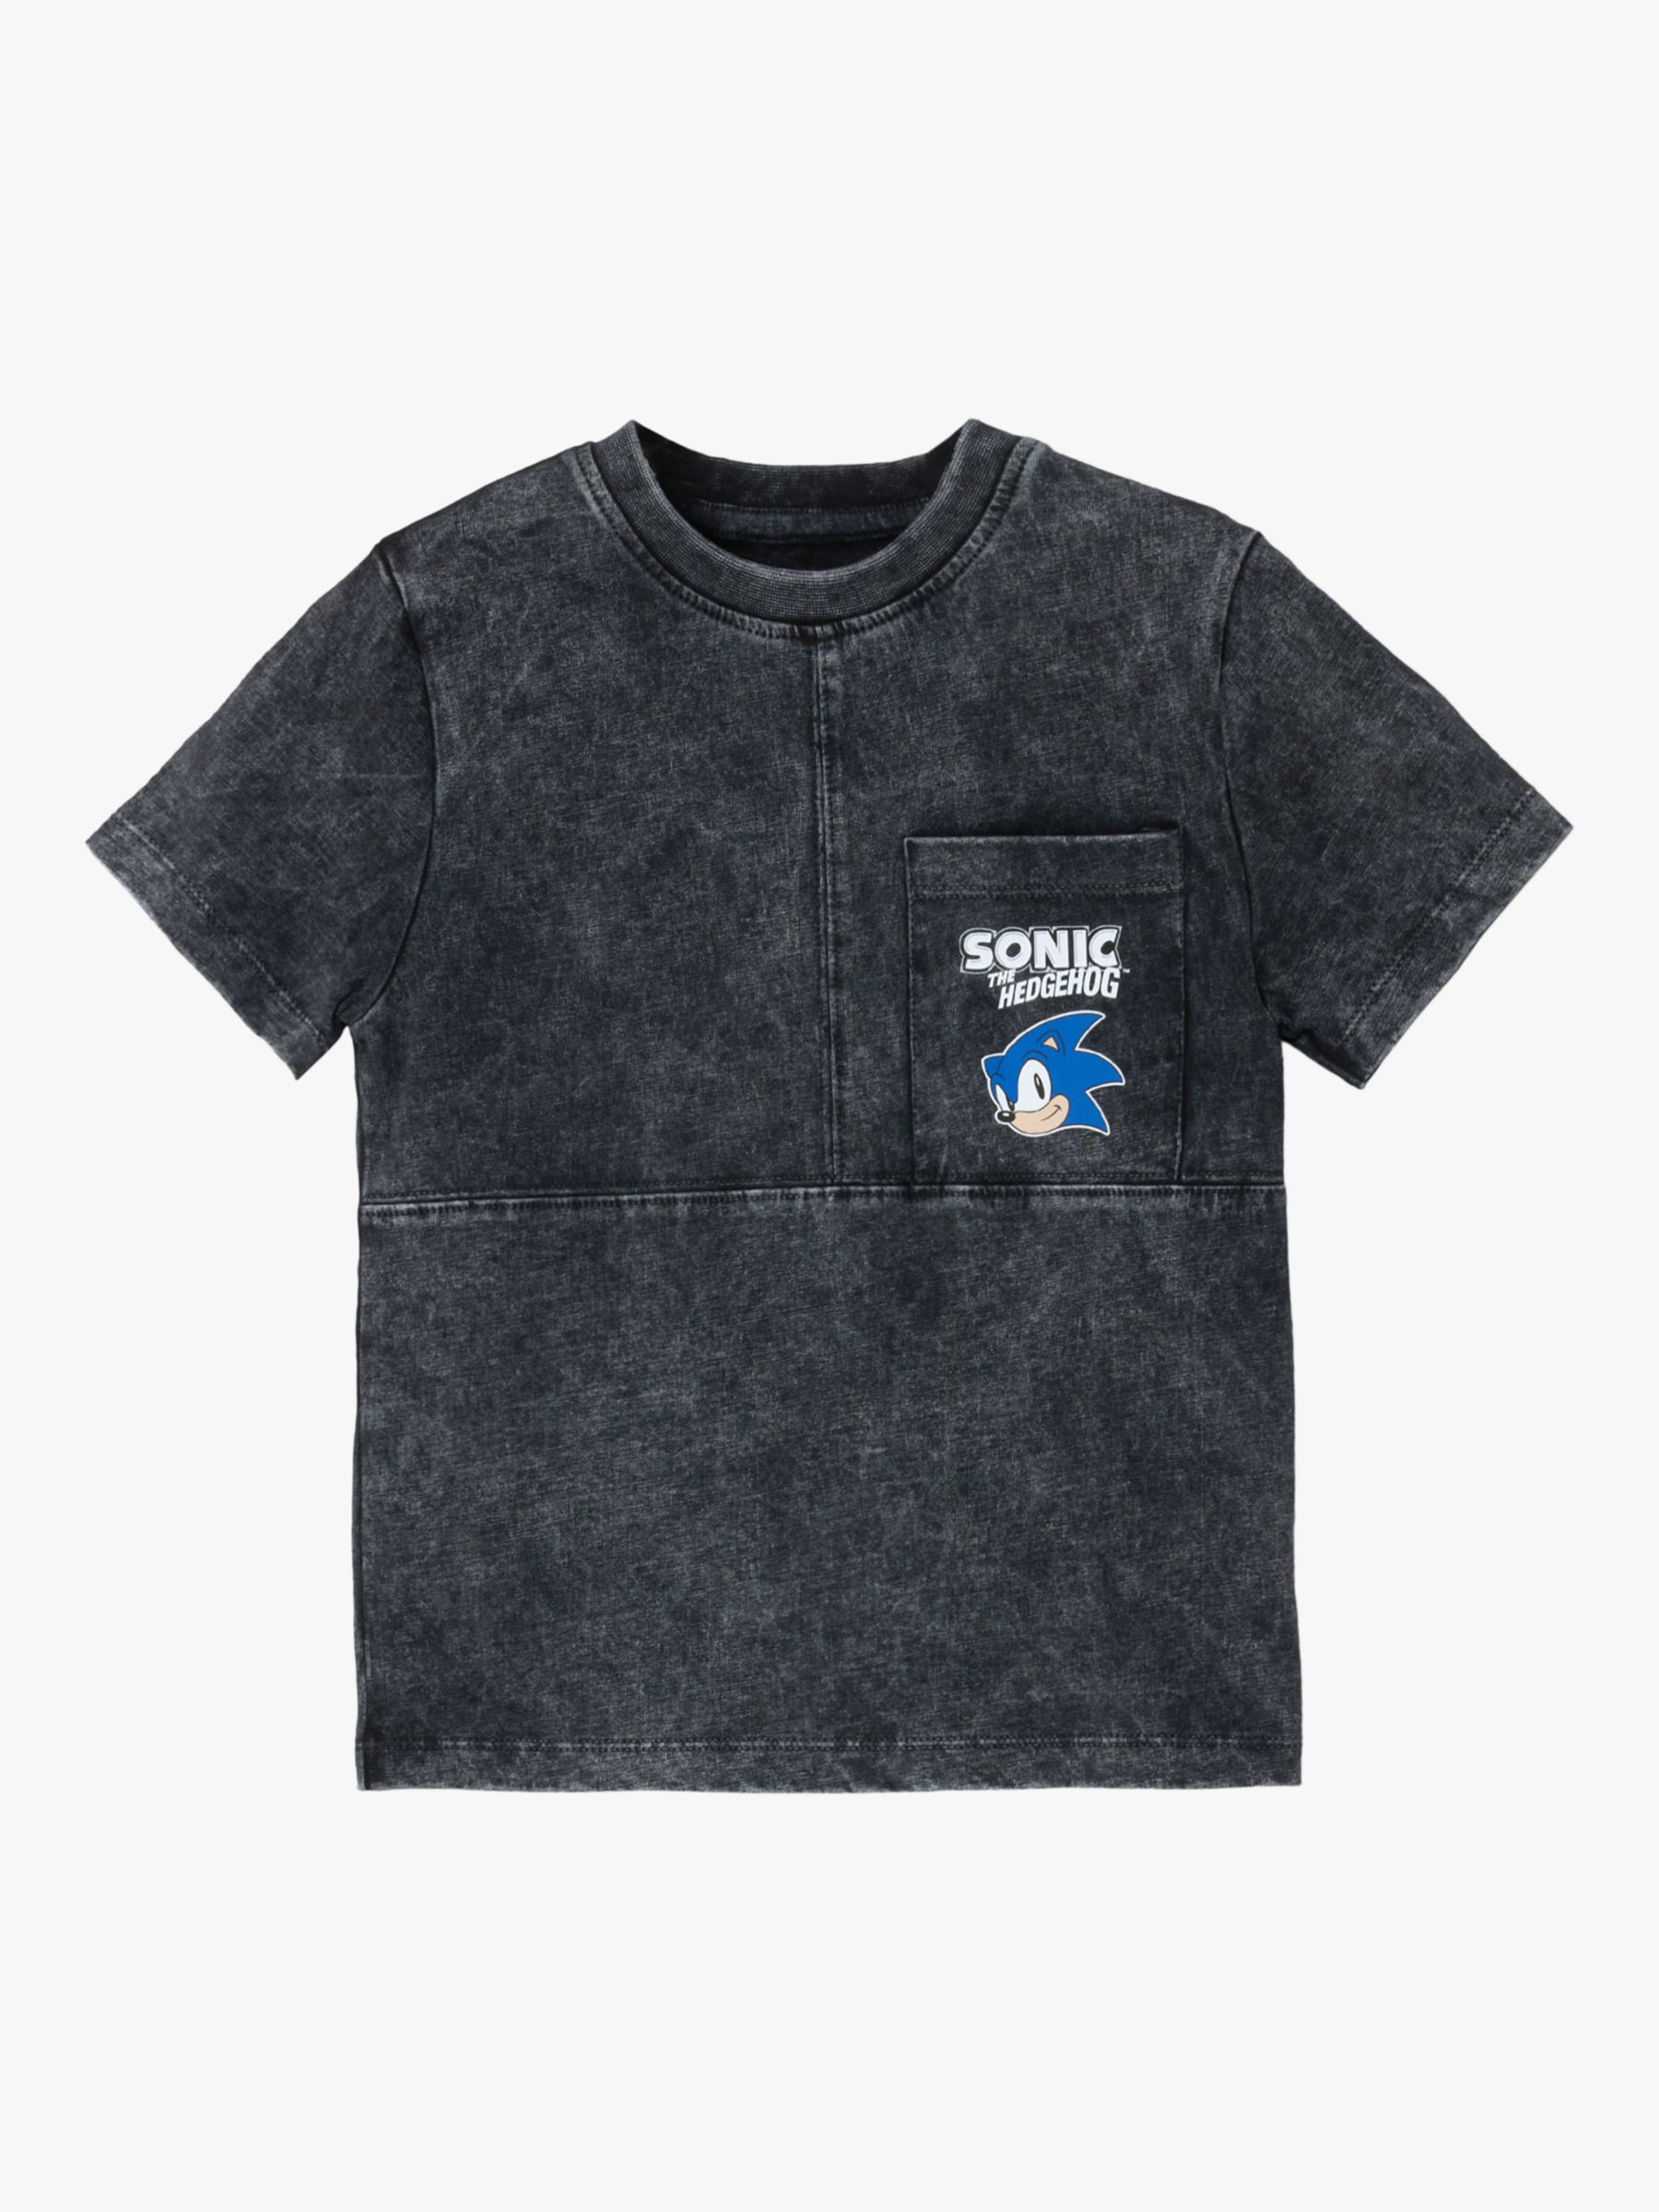 Buy Angel & Rocket Kids' Sonic Black Seam Detail Print T-Shirt, Black Online at johnlewis.com